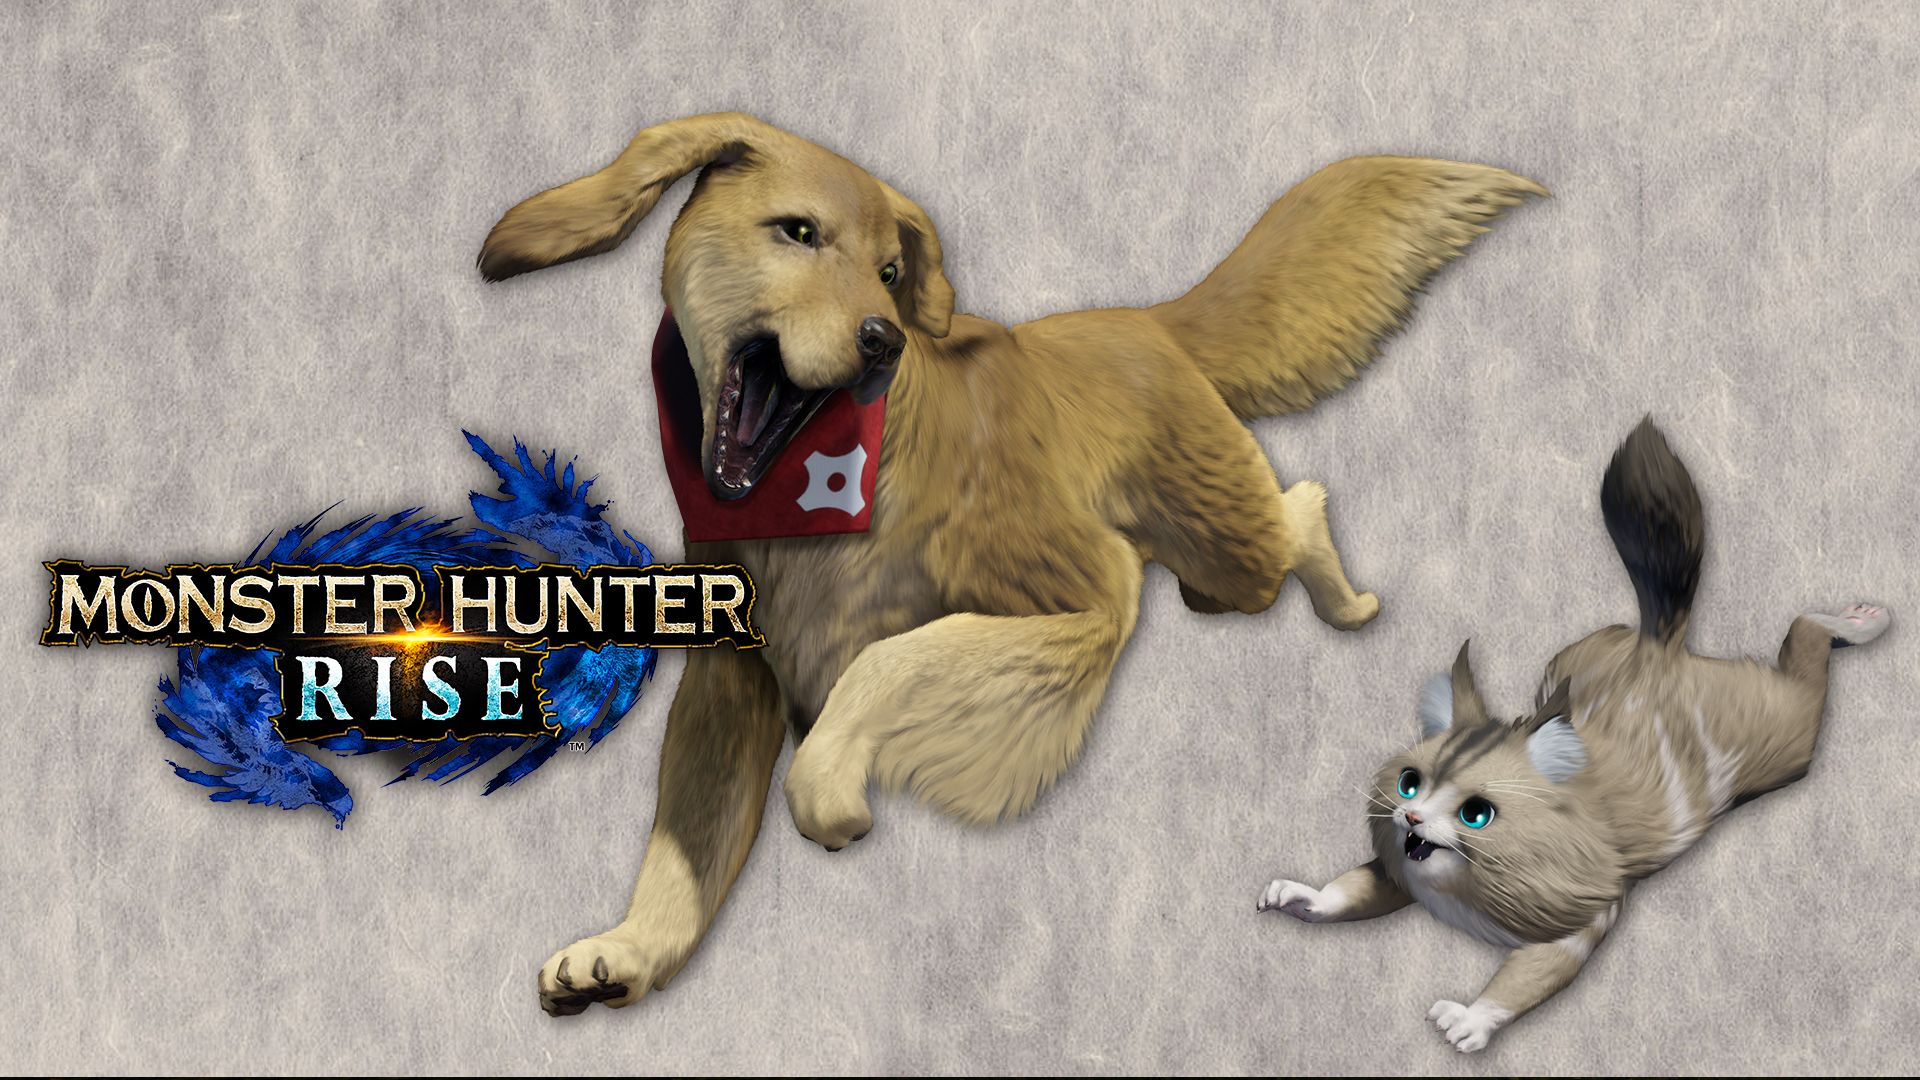 Monster Hunter Rise, Capcom, Nintendo Switch, 013388410194 - image 3 of 3